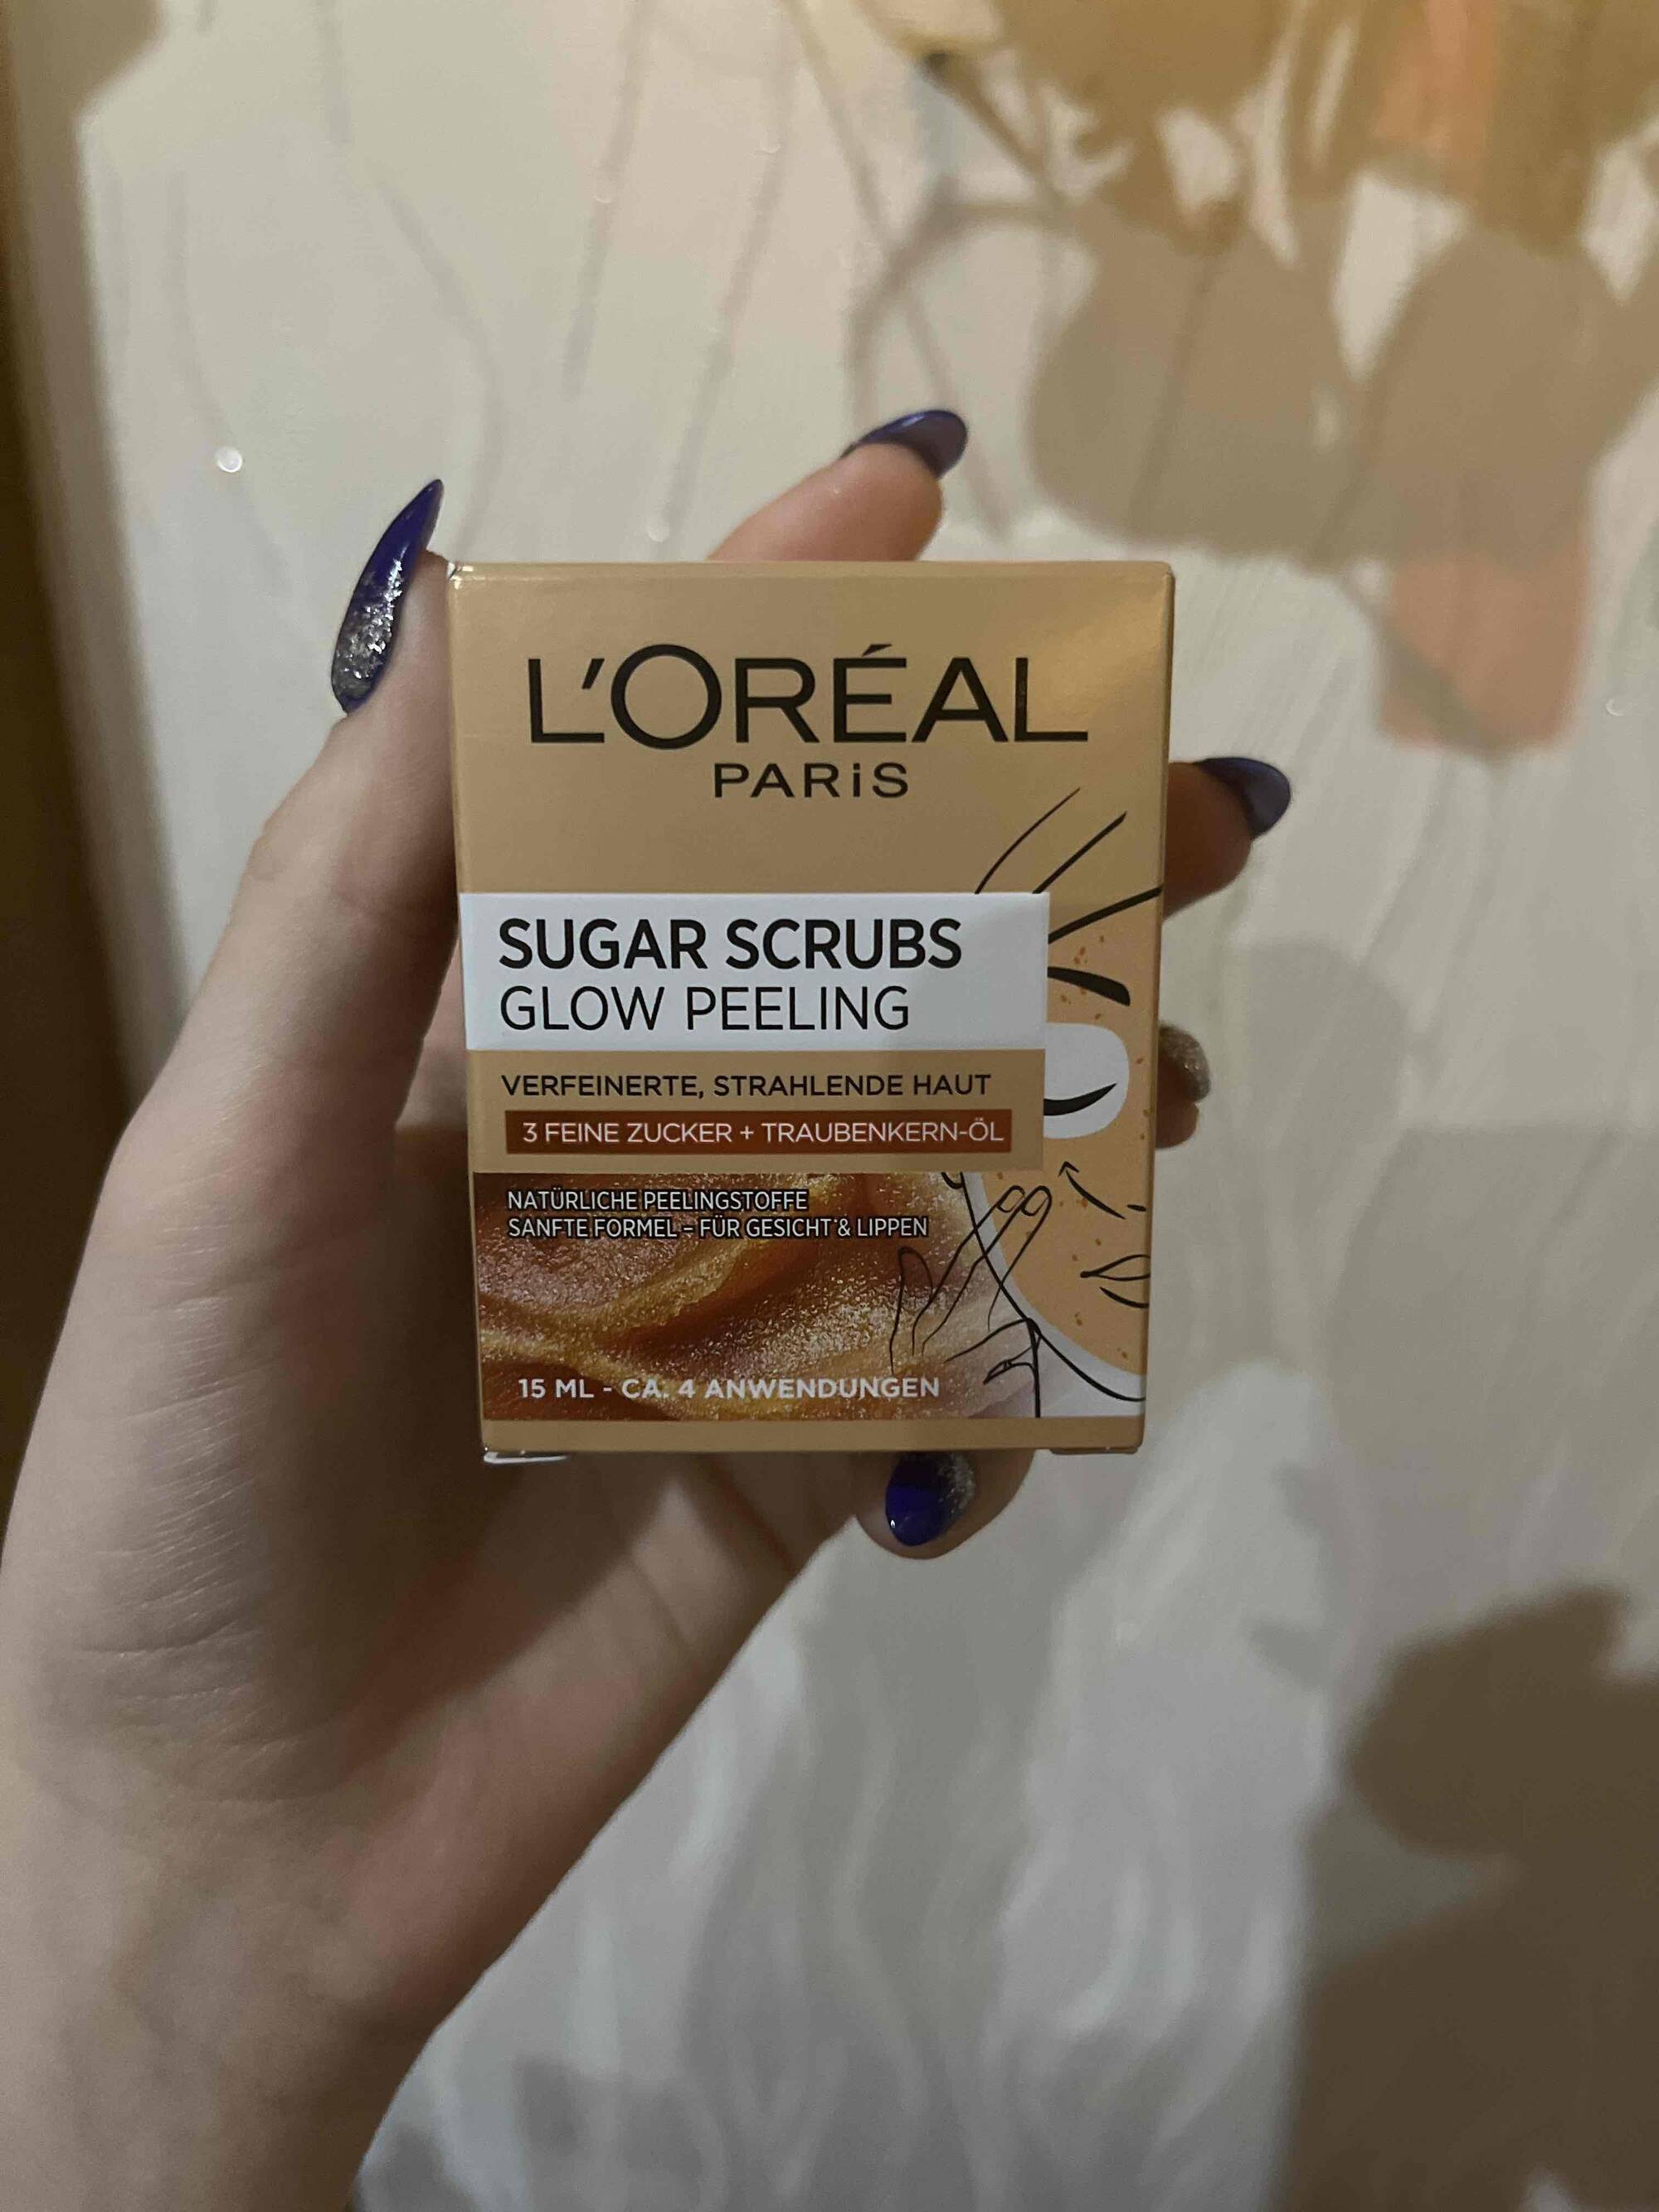 L'ORÉAL PARIS - Sugar scrubs - Glow peeling